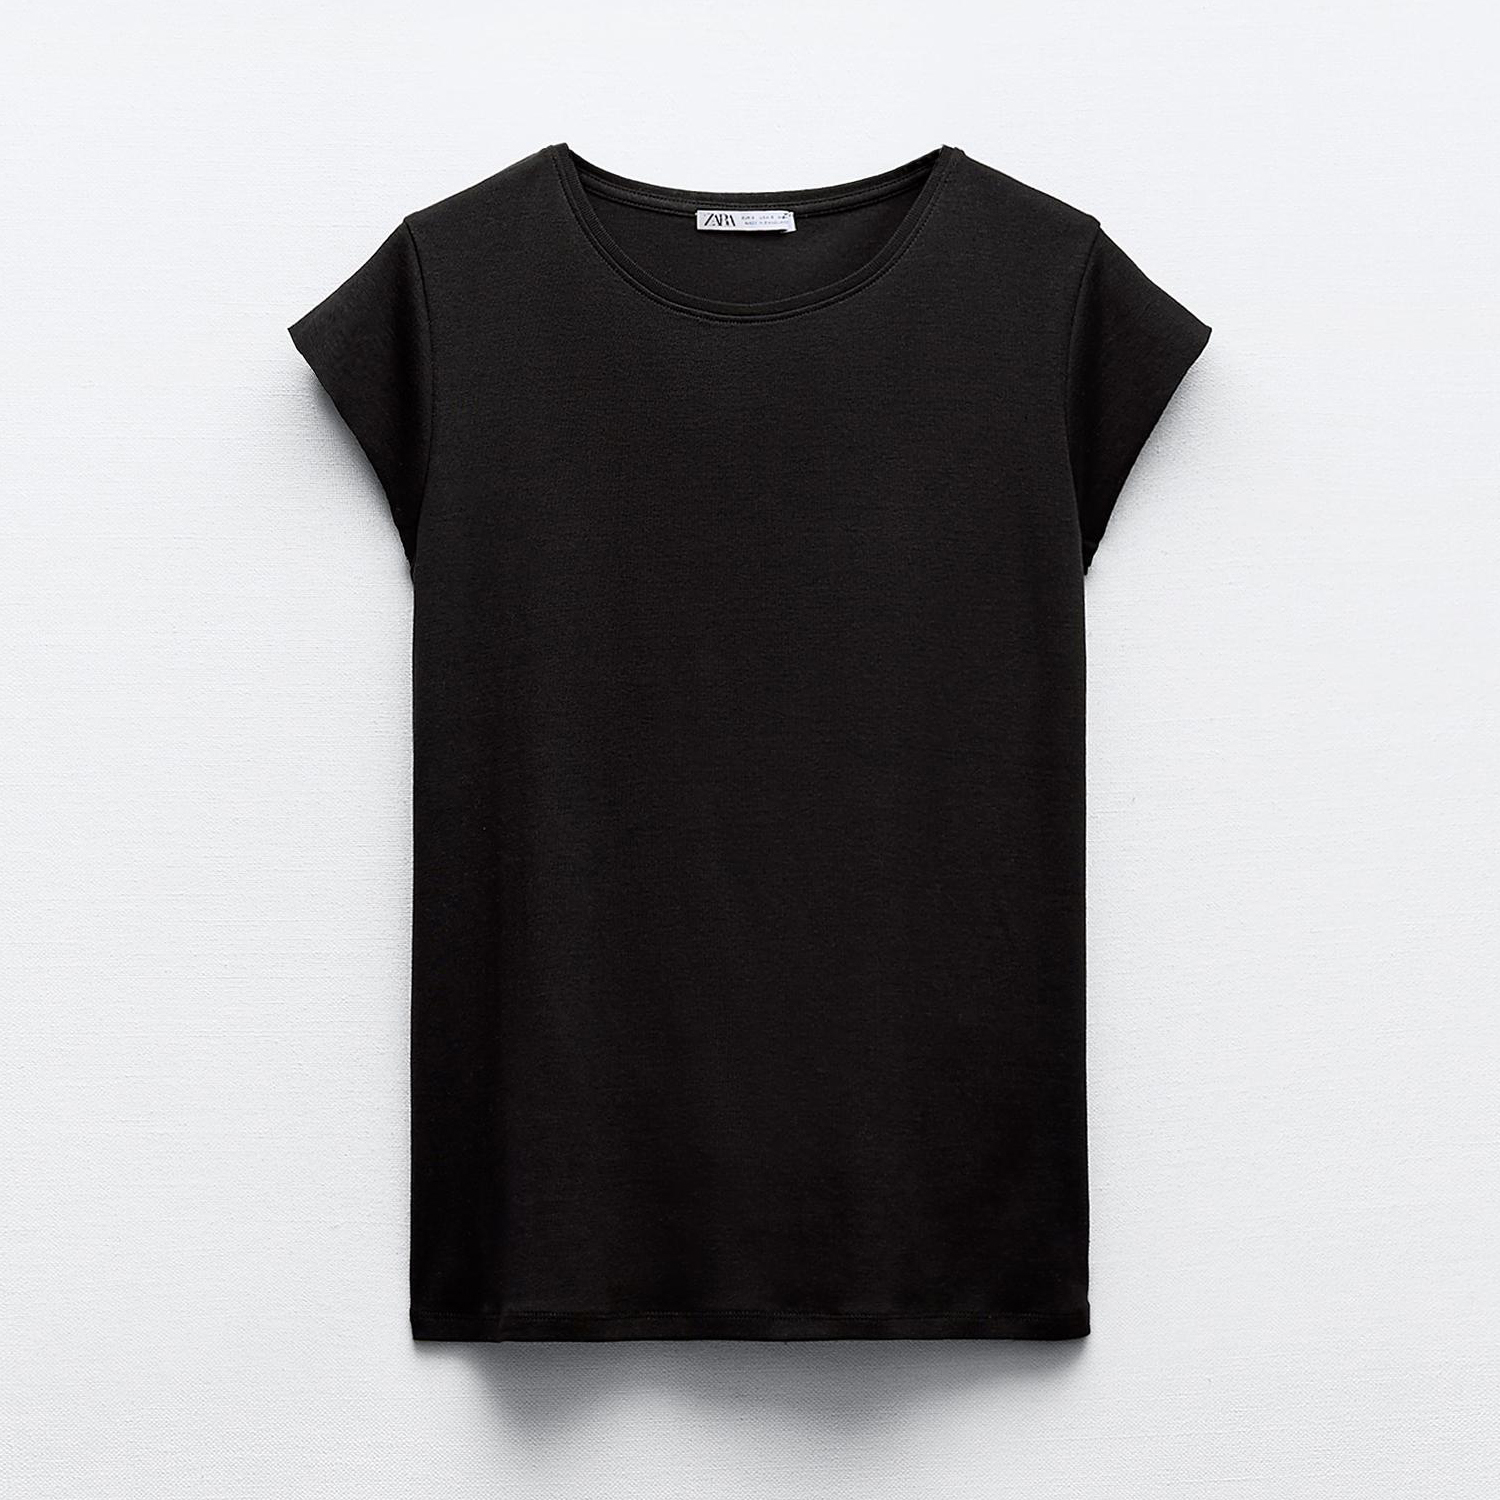 Футболка Zara Short Sleeve Cotton, черный футболка zara short sleeve черный